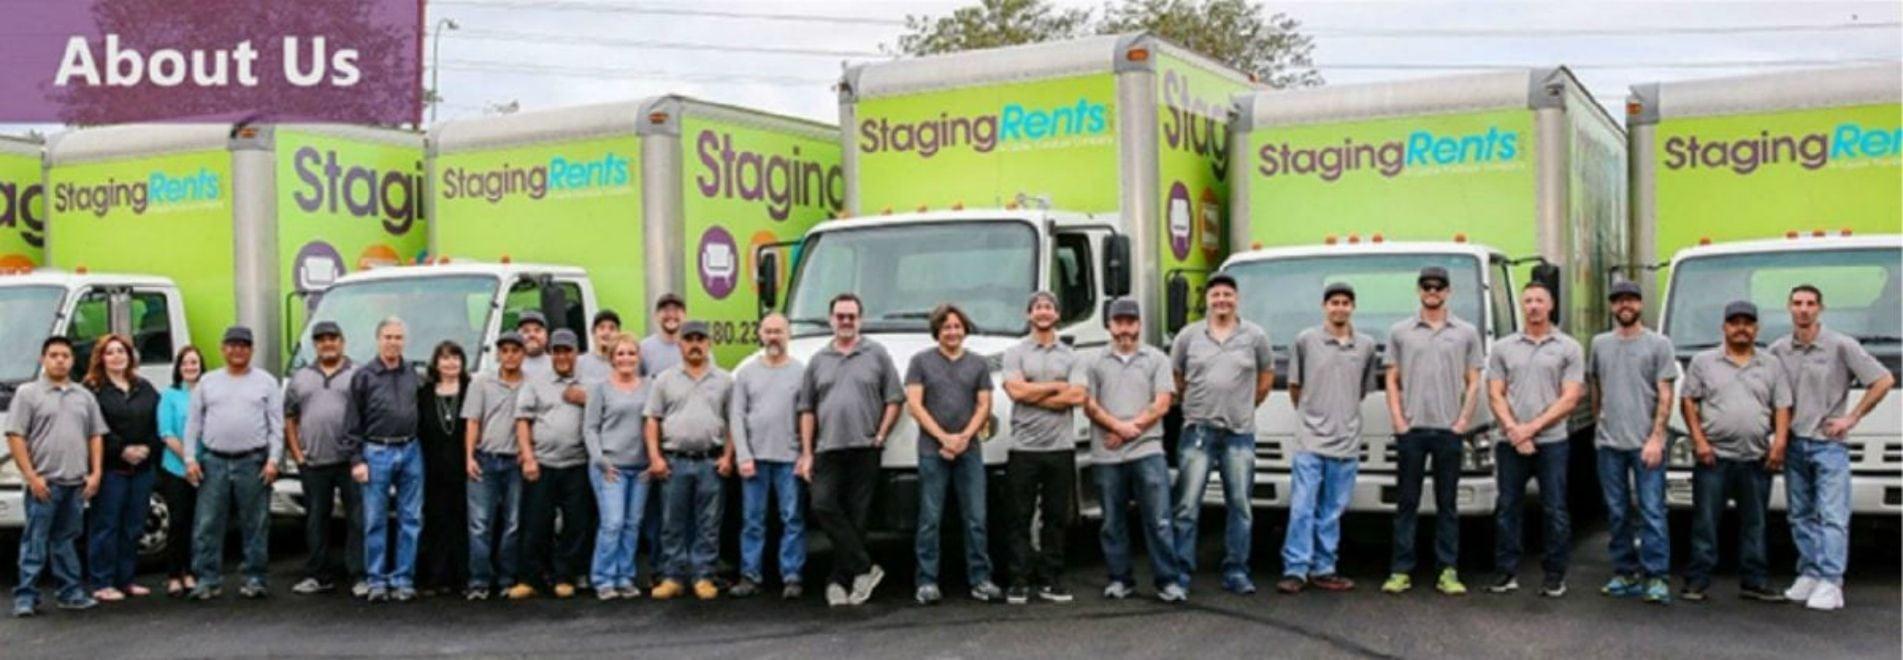 stagingrents team photo